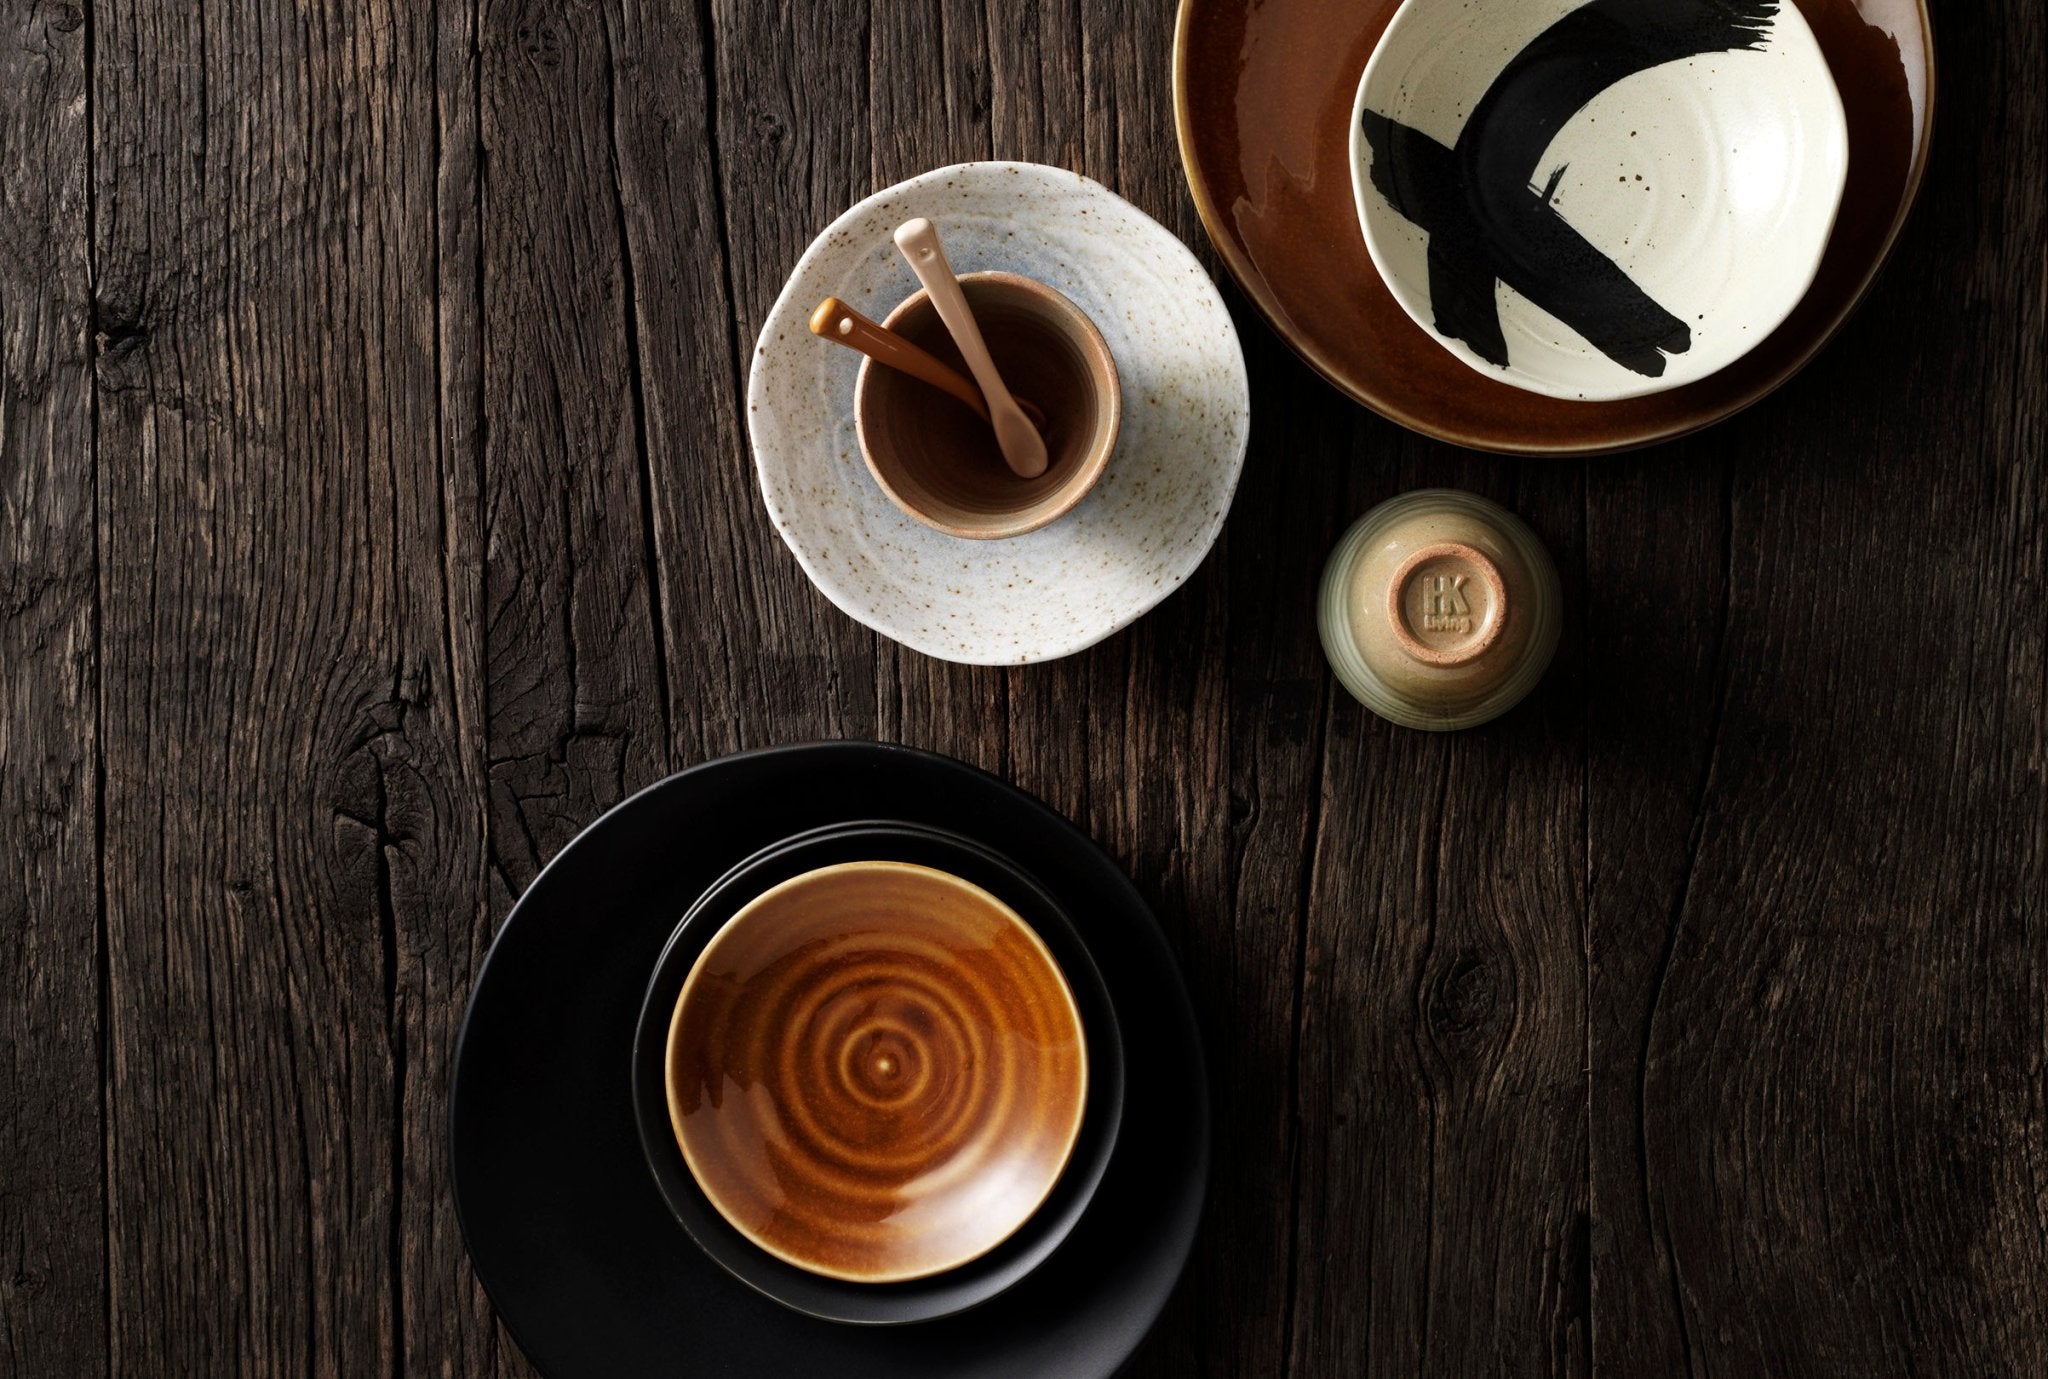 Japanese ceramic yunomi mugs (set of 4) - Urban Nest